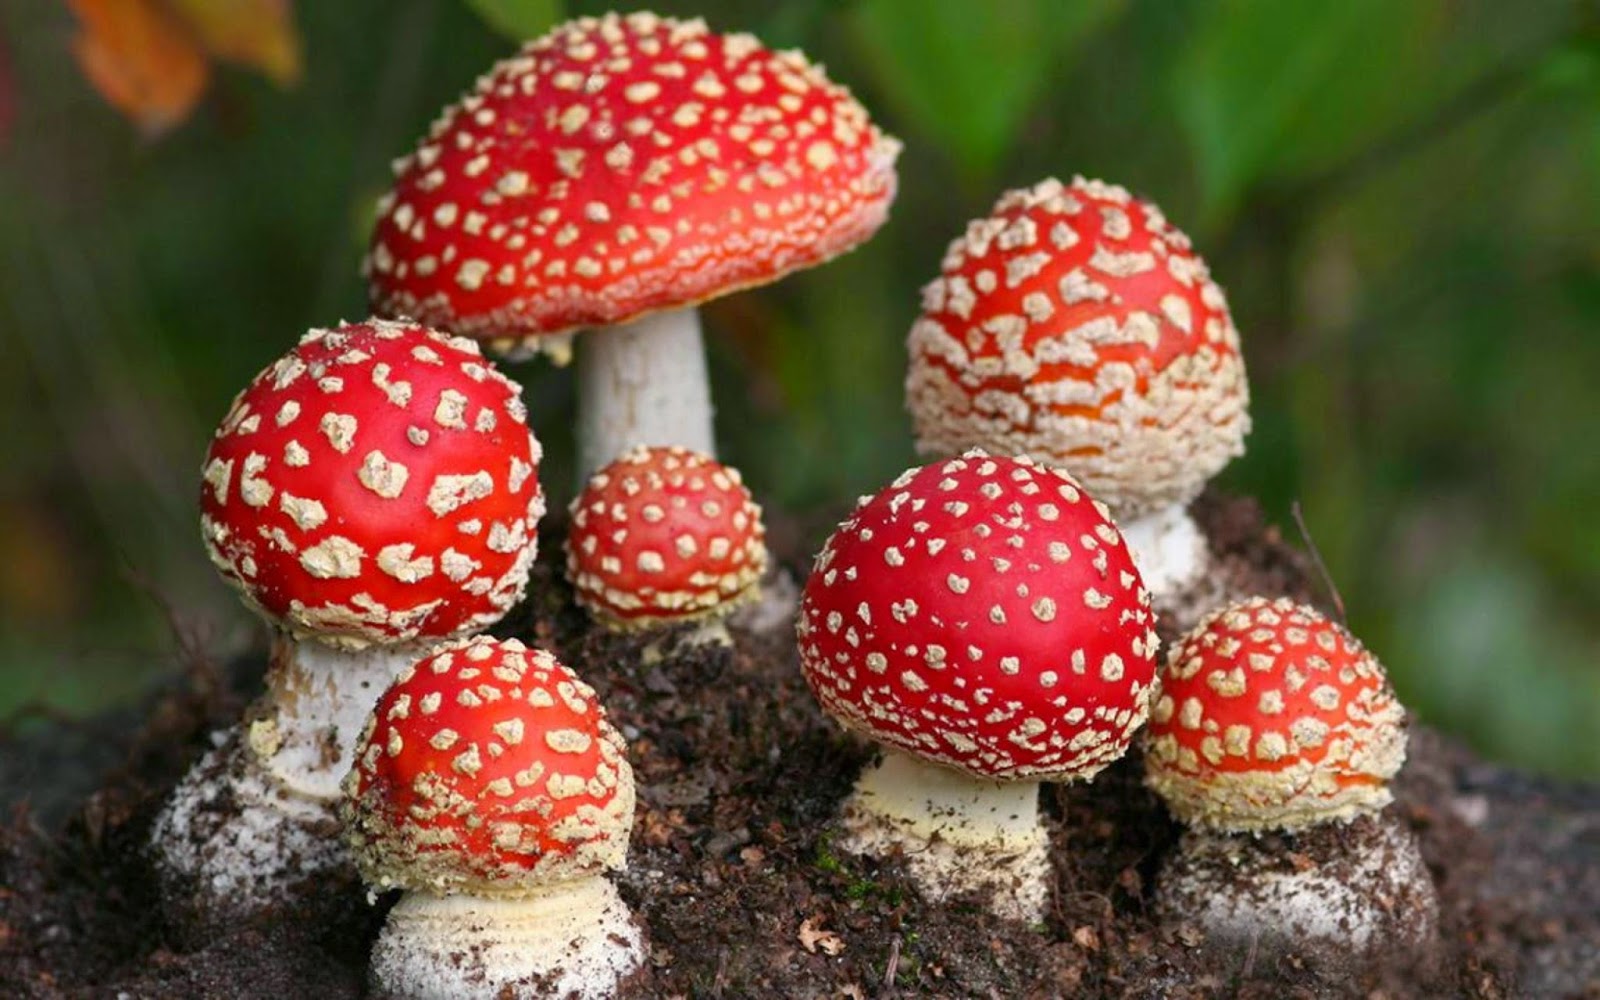 amanita_muscaria_red-mushroom-wild-photography-wallpaper-2-779013914.jpg